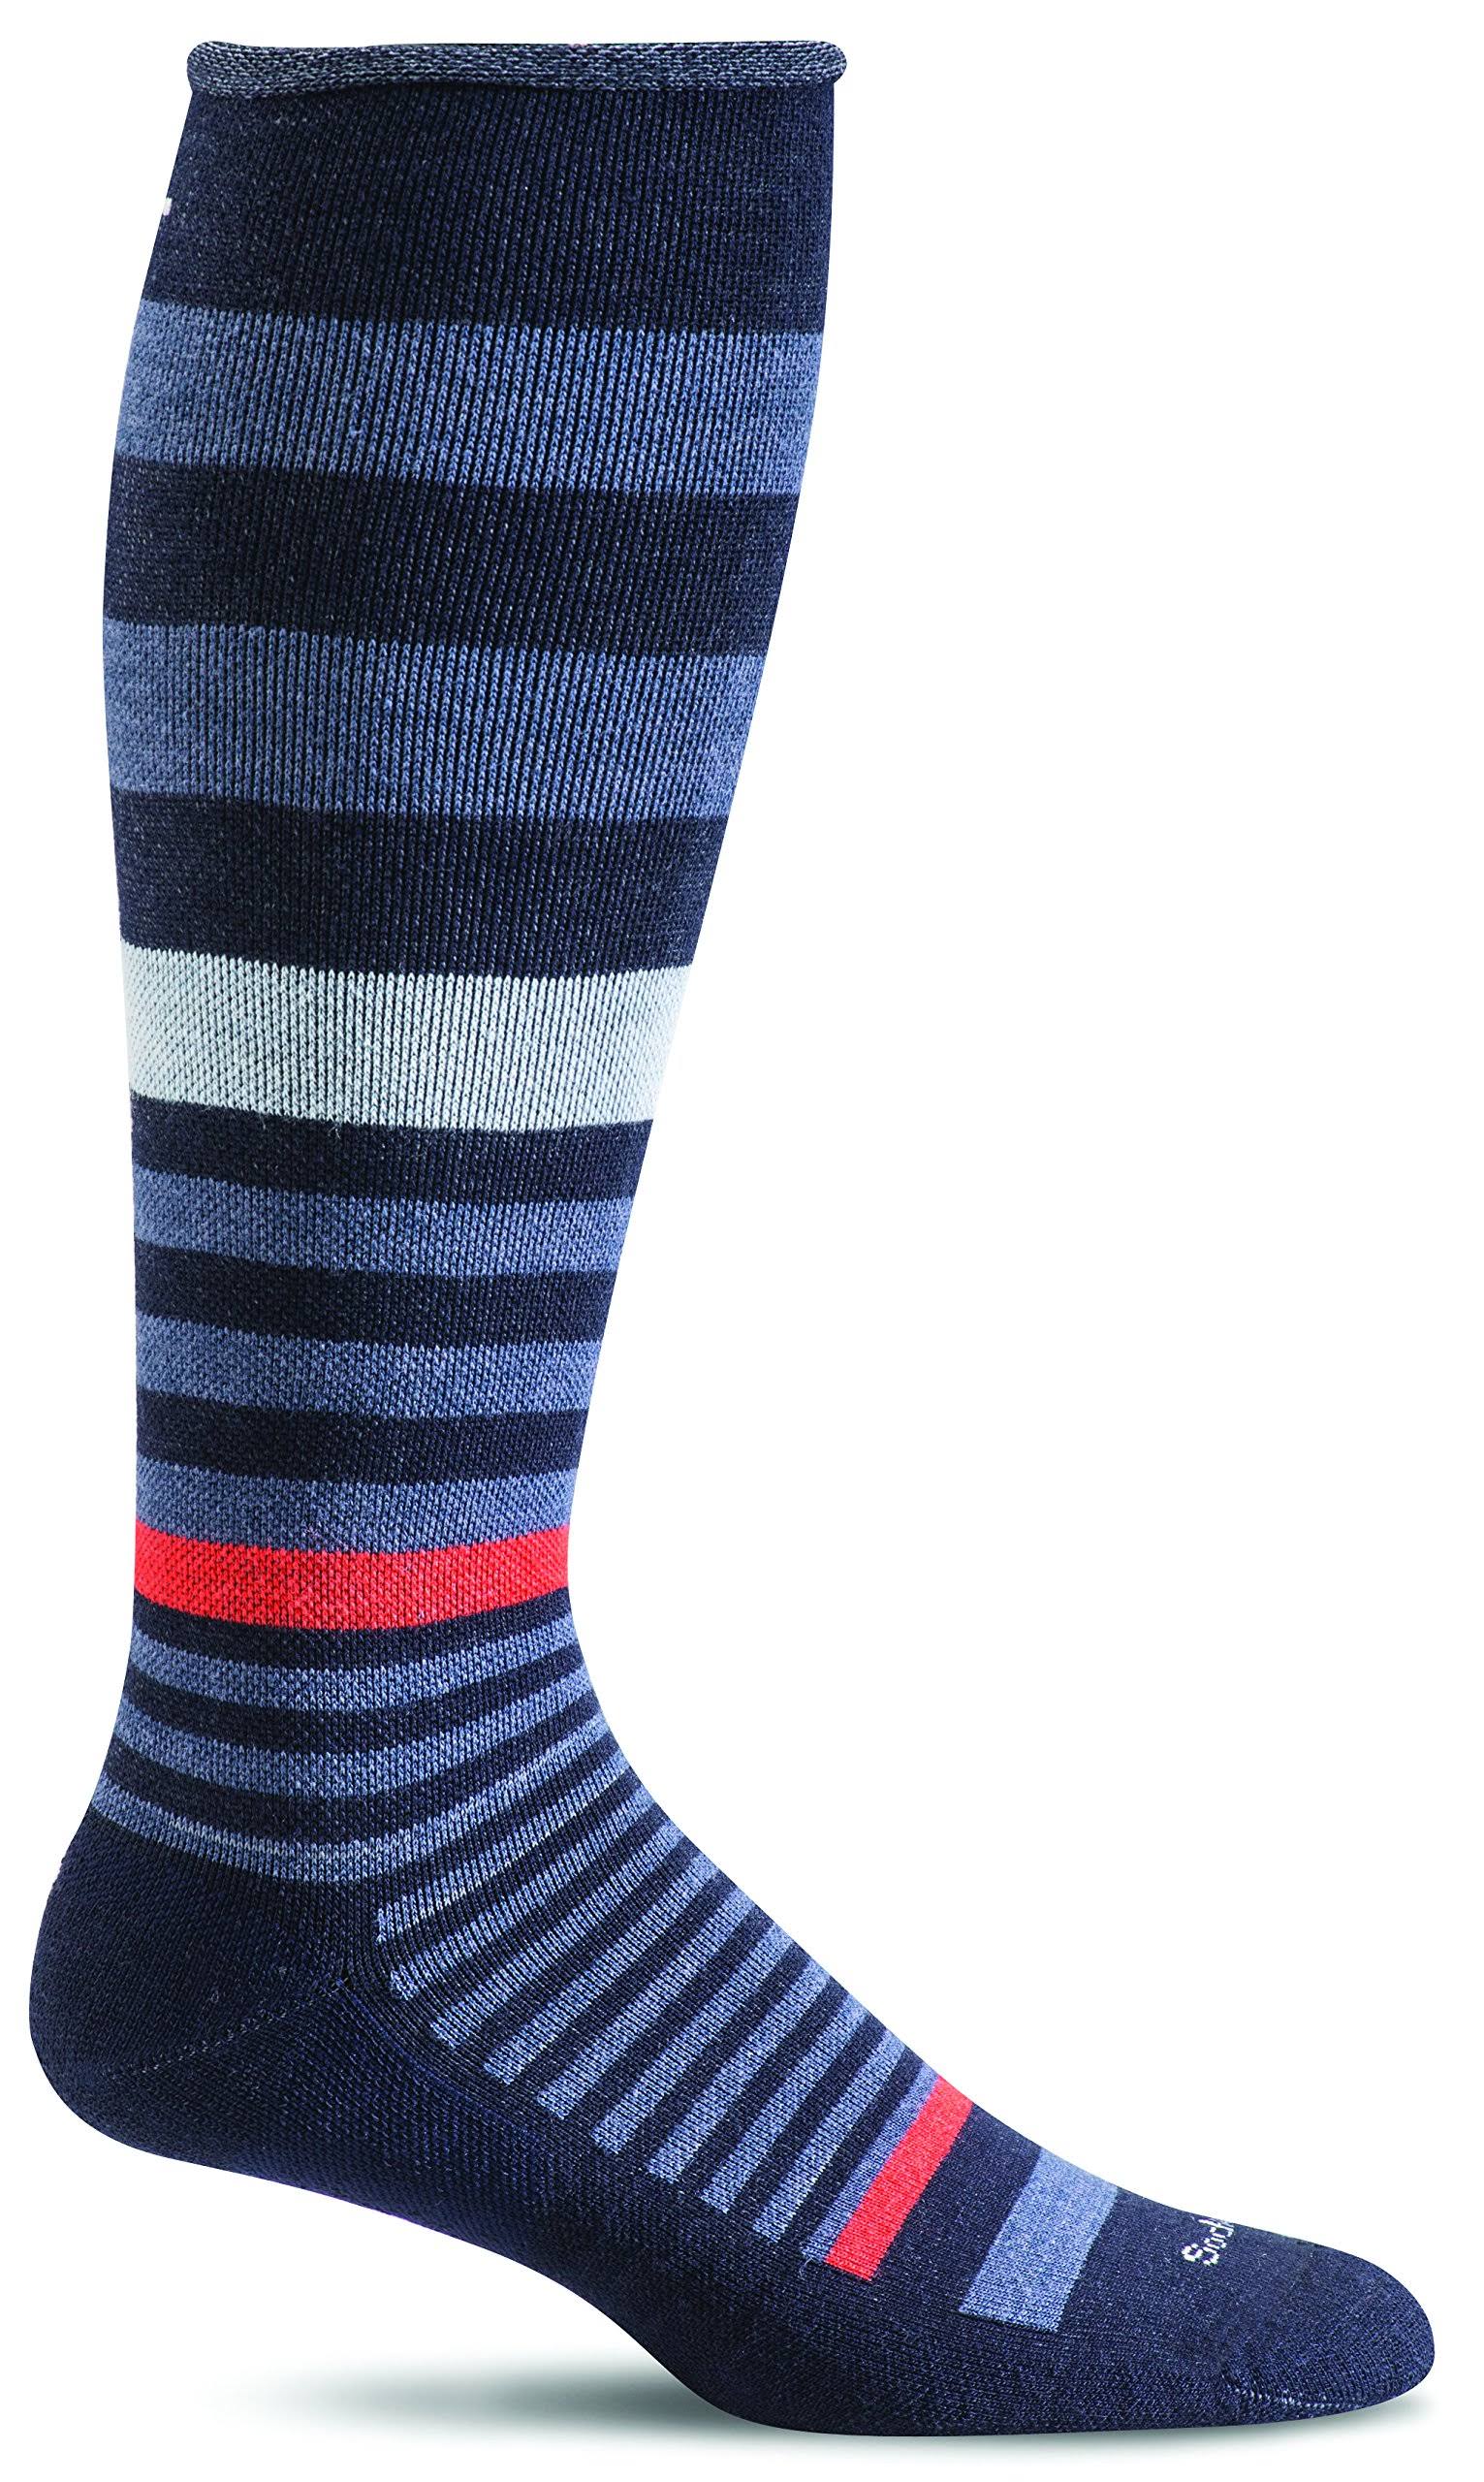 Sockwell Women's Orbital Stripe Graduated Compression Socks - Navy, Small, Medium